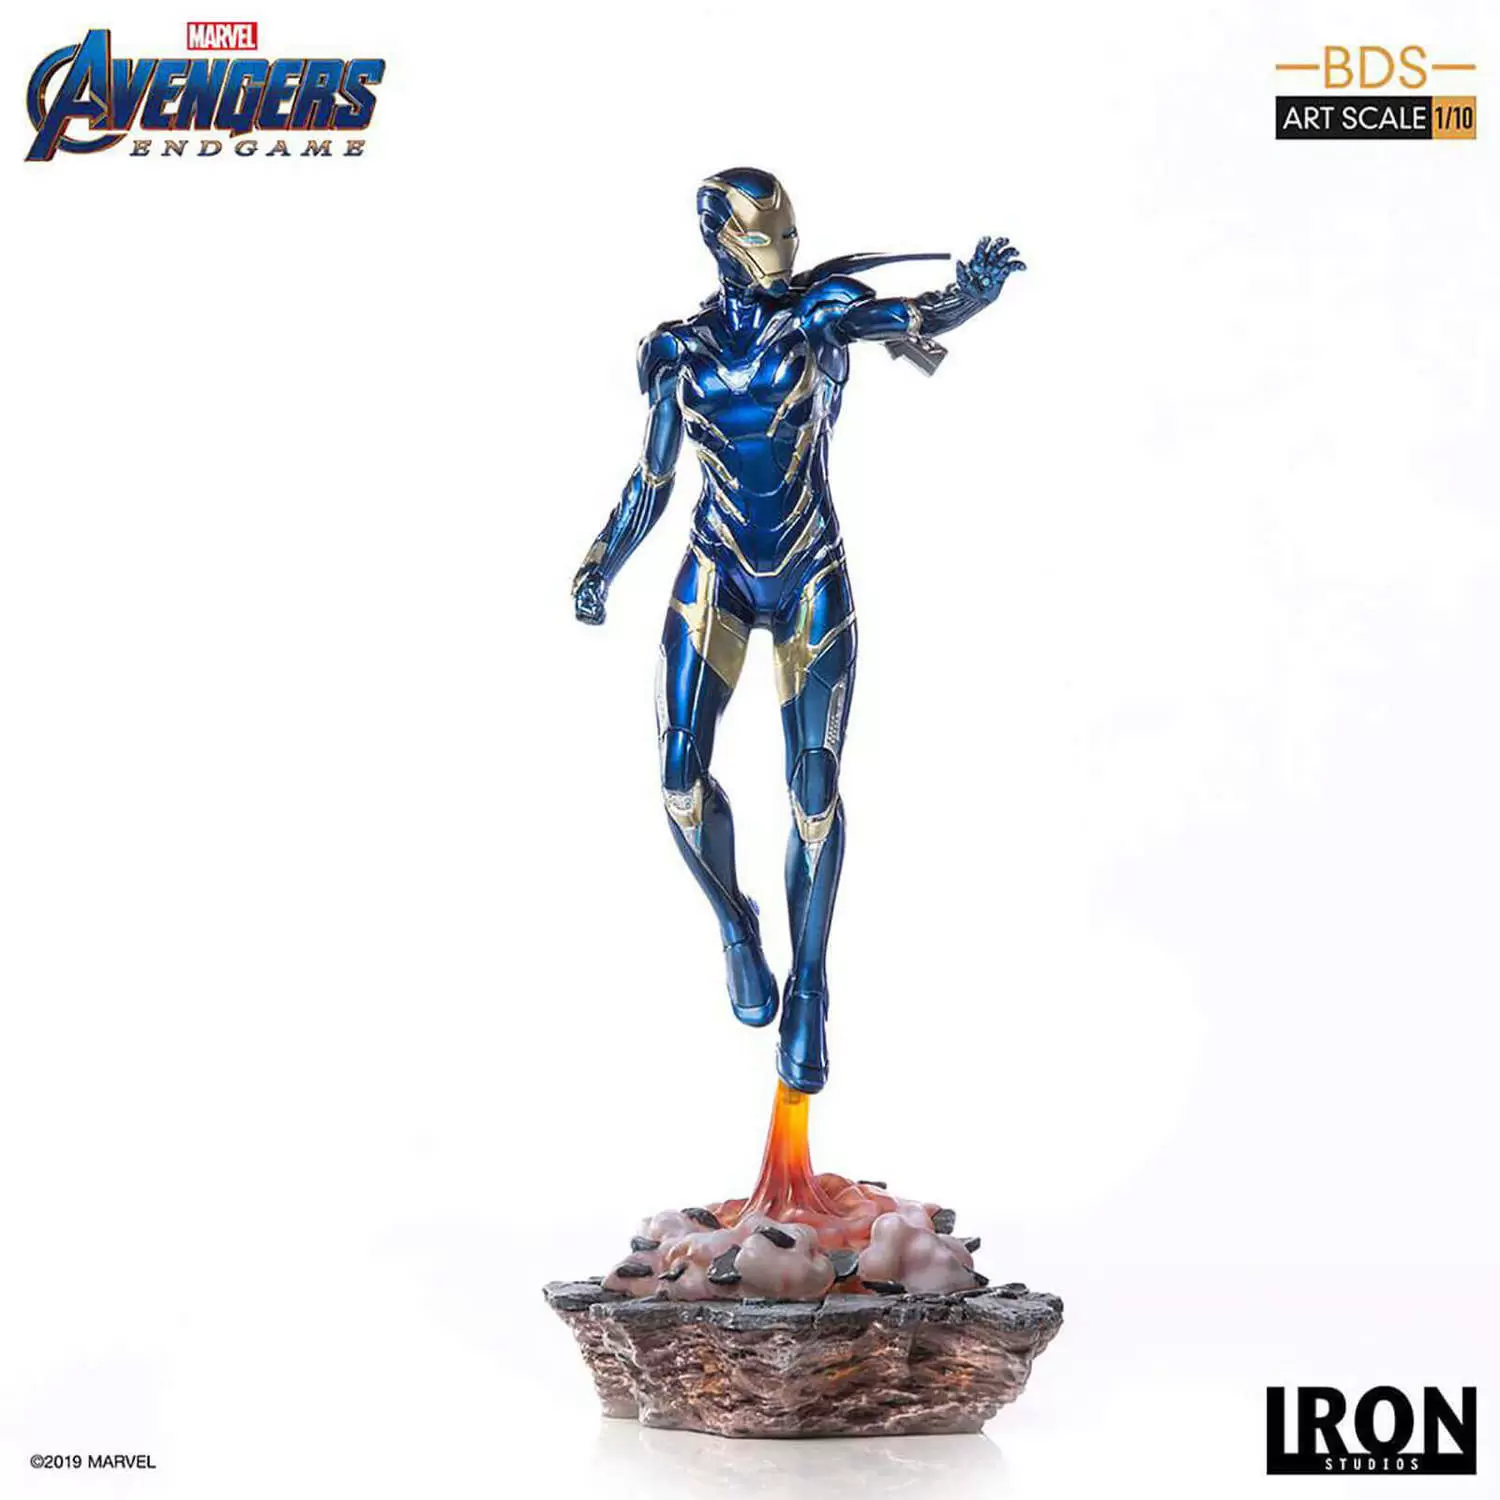 Iron Studios - Avengers: Endgame - Pepper Potts in Rescue Suit - BDS Art Scale 